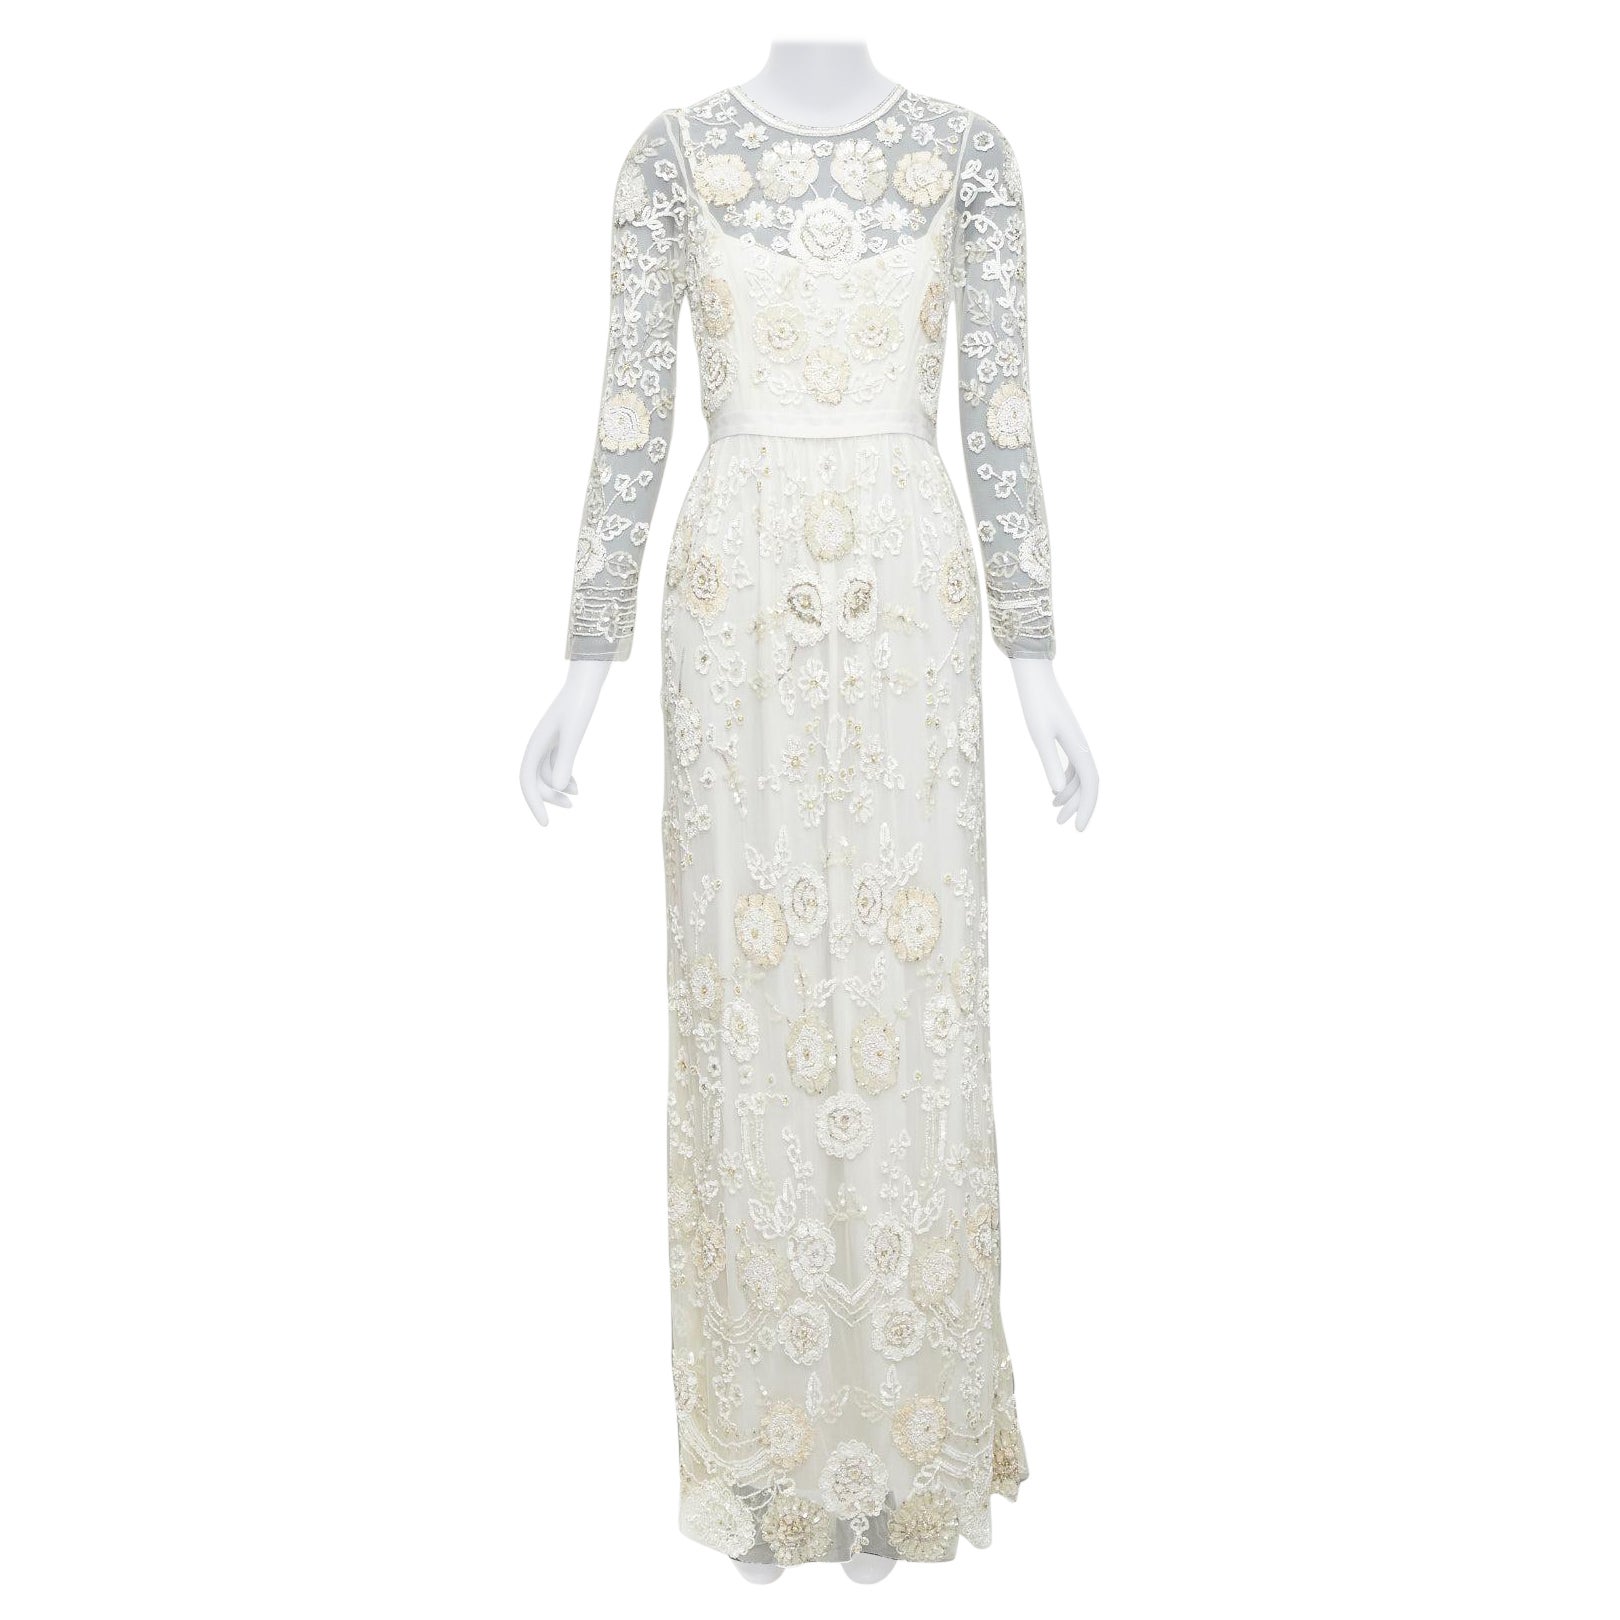 NEEDLE & THREAD Bridal white silver beads embellish chiffon overlay gown UK6 XS